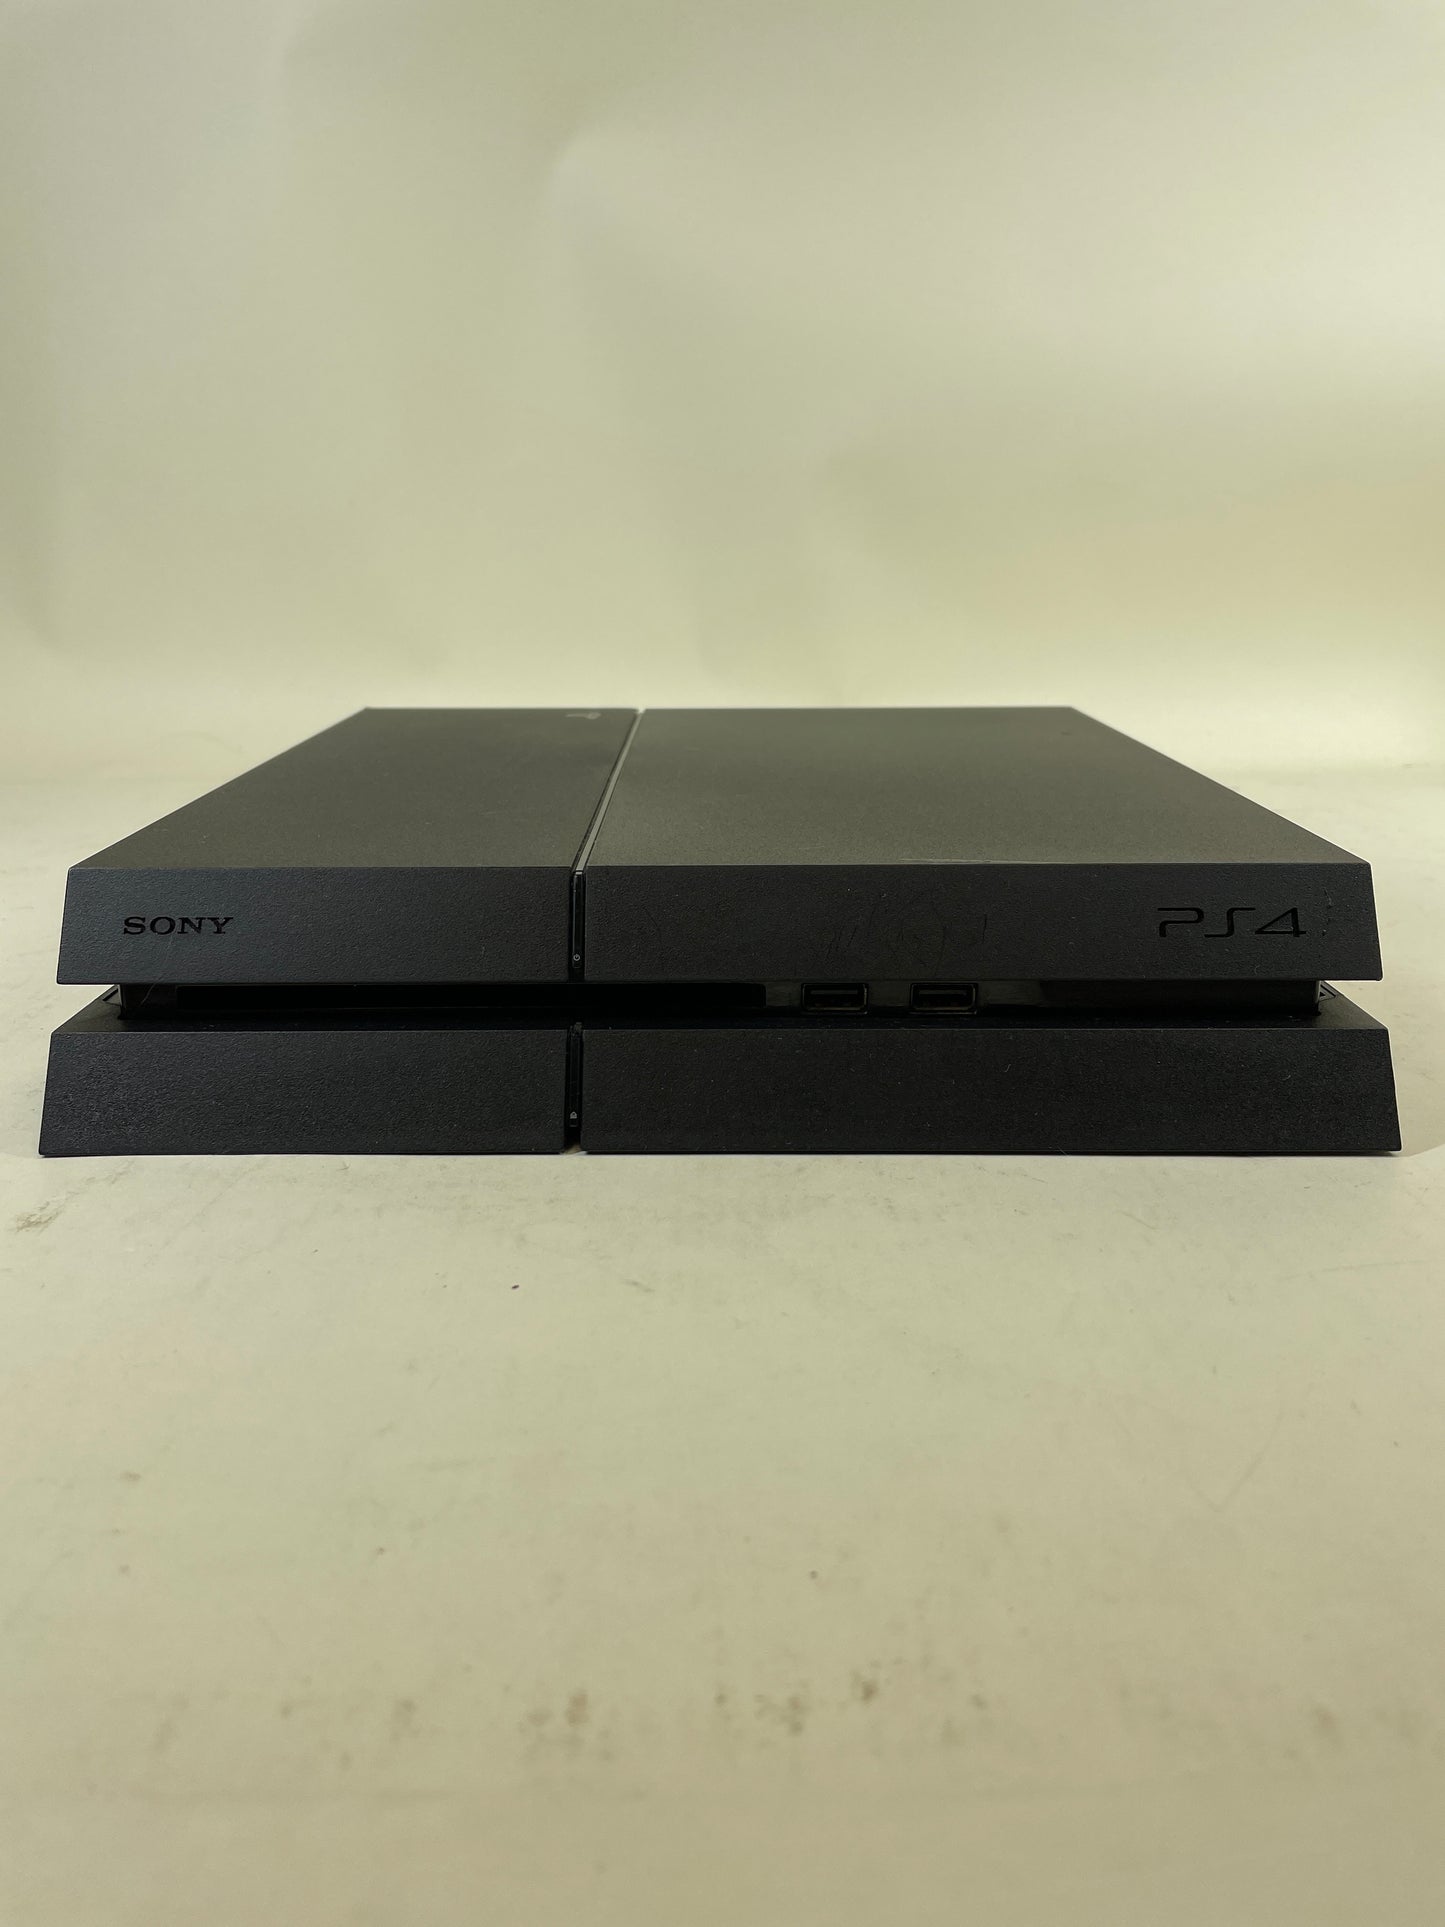 Sony PlayStation 4 Slim PS4 500GB Black Console Gaming System CUH-1215A